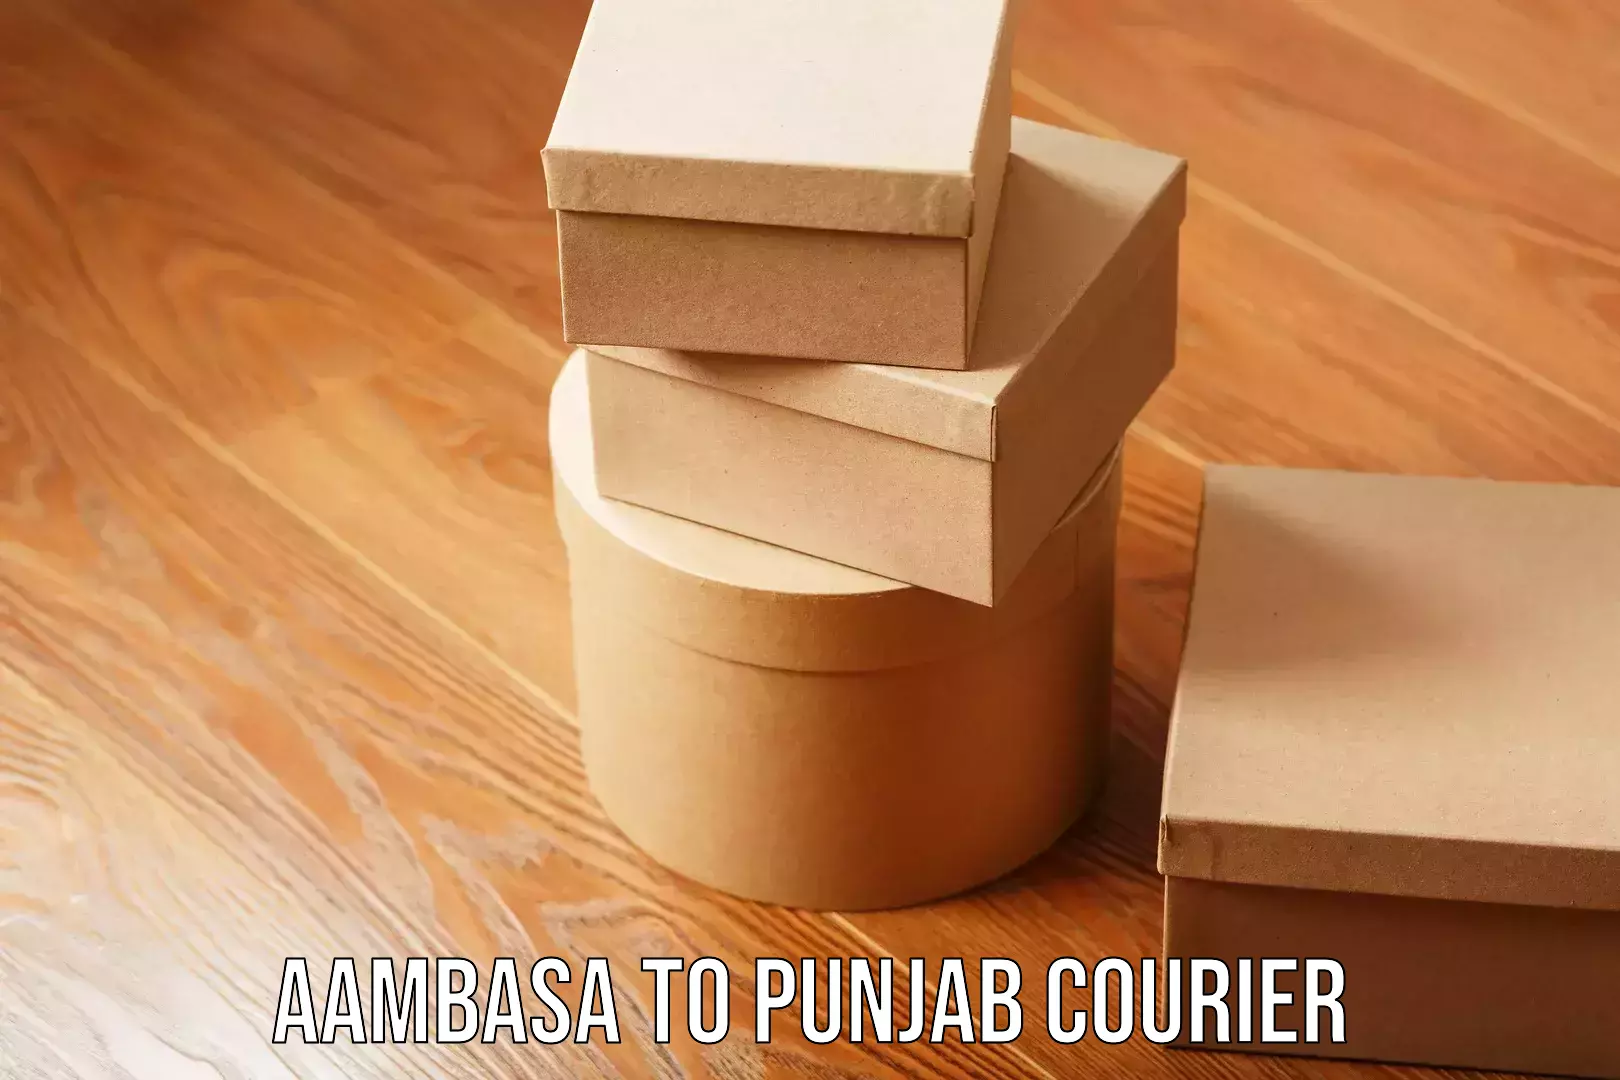 Seamless shipping experience in Aambasa to Punjab